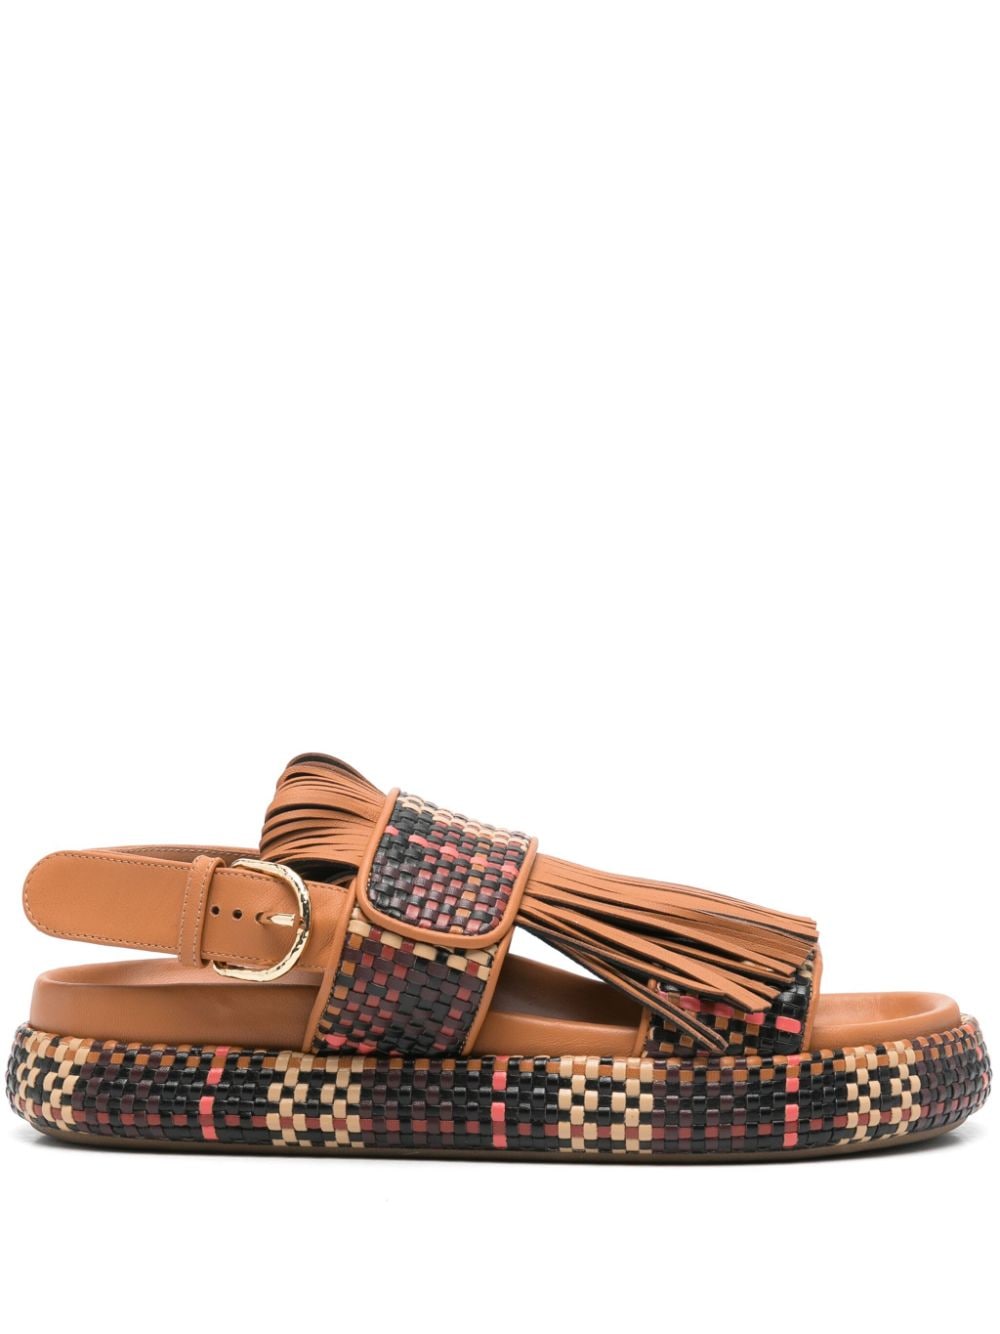 Alba leather sandals